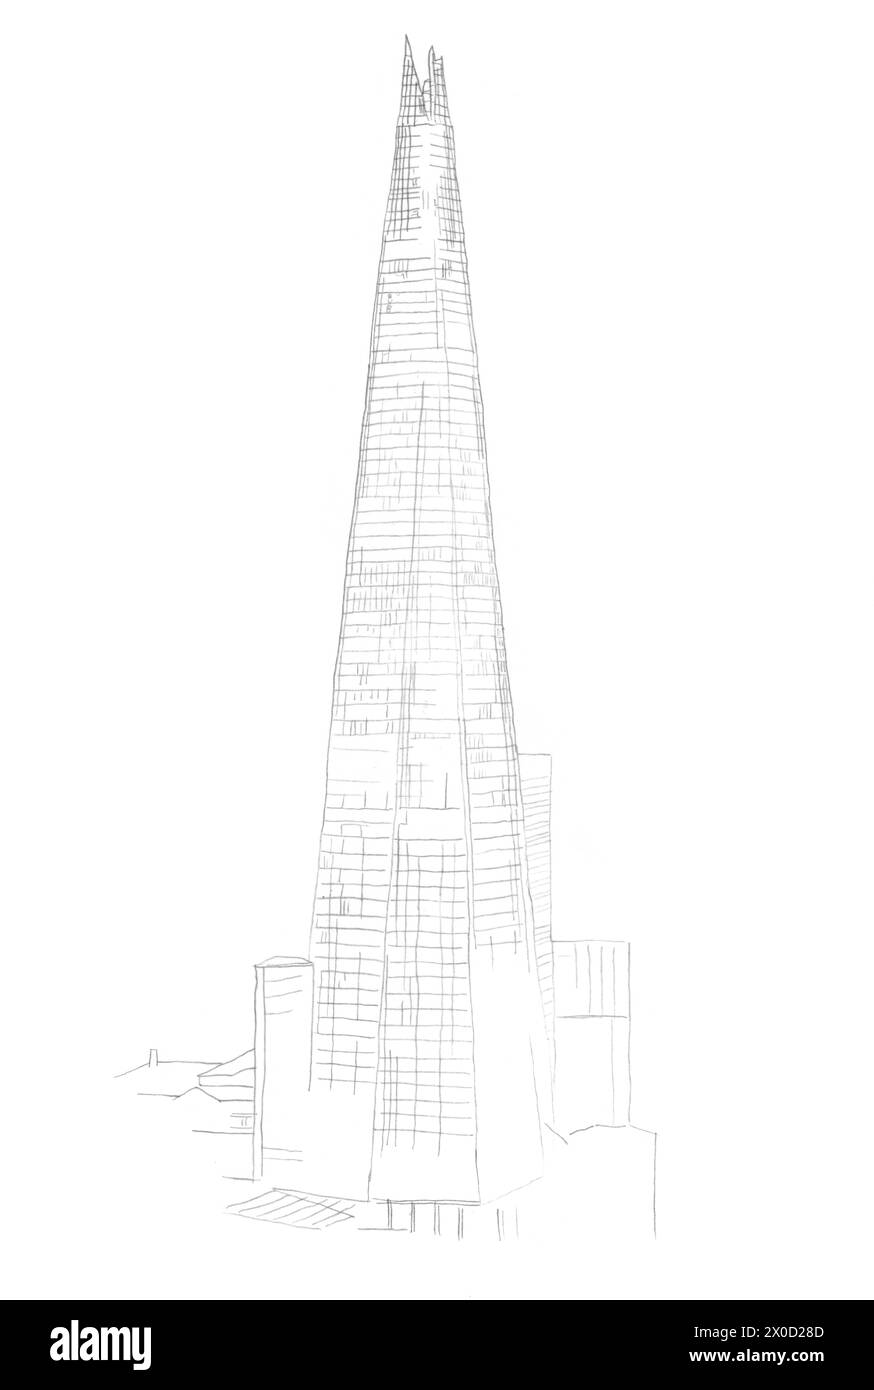 Architectural pencil drawing sketch of The Shard skyscraper building in London Bridge, London, UK Stock Photo